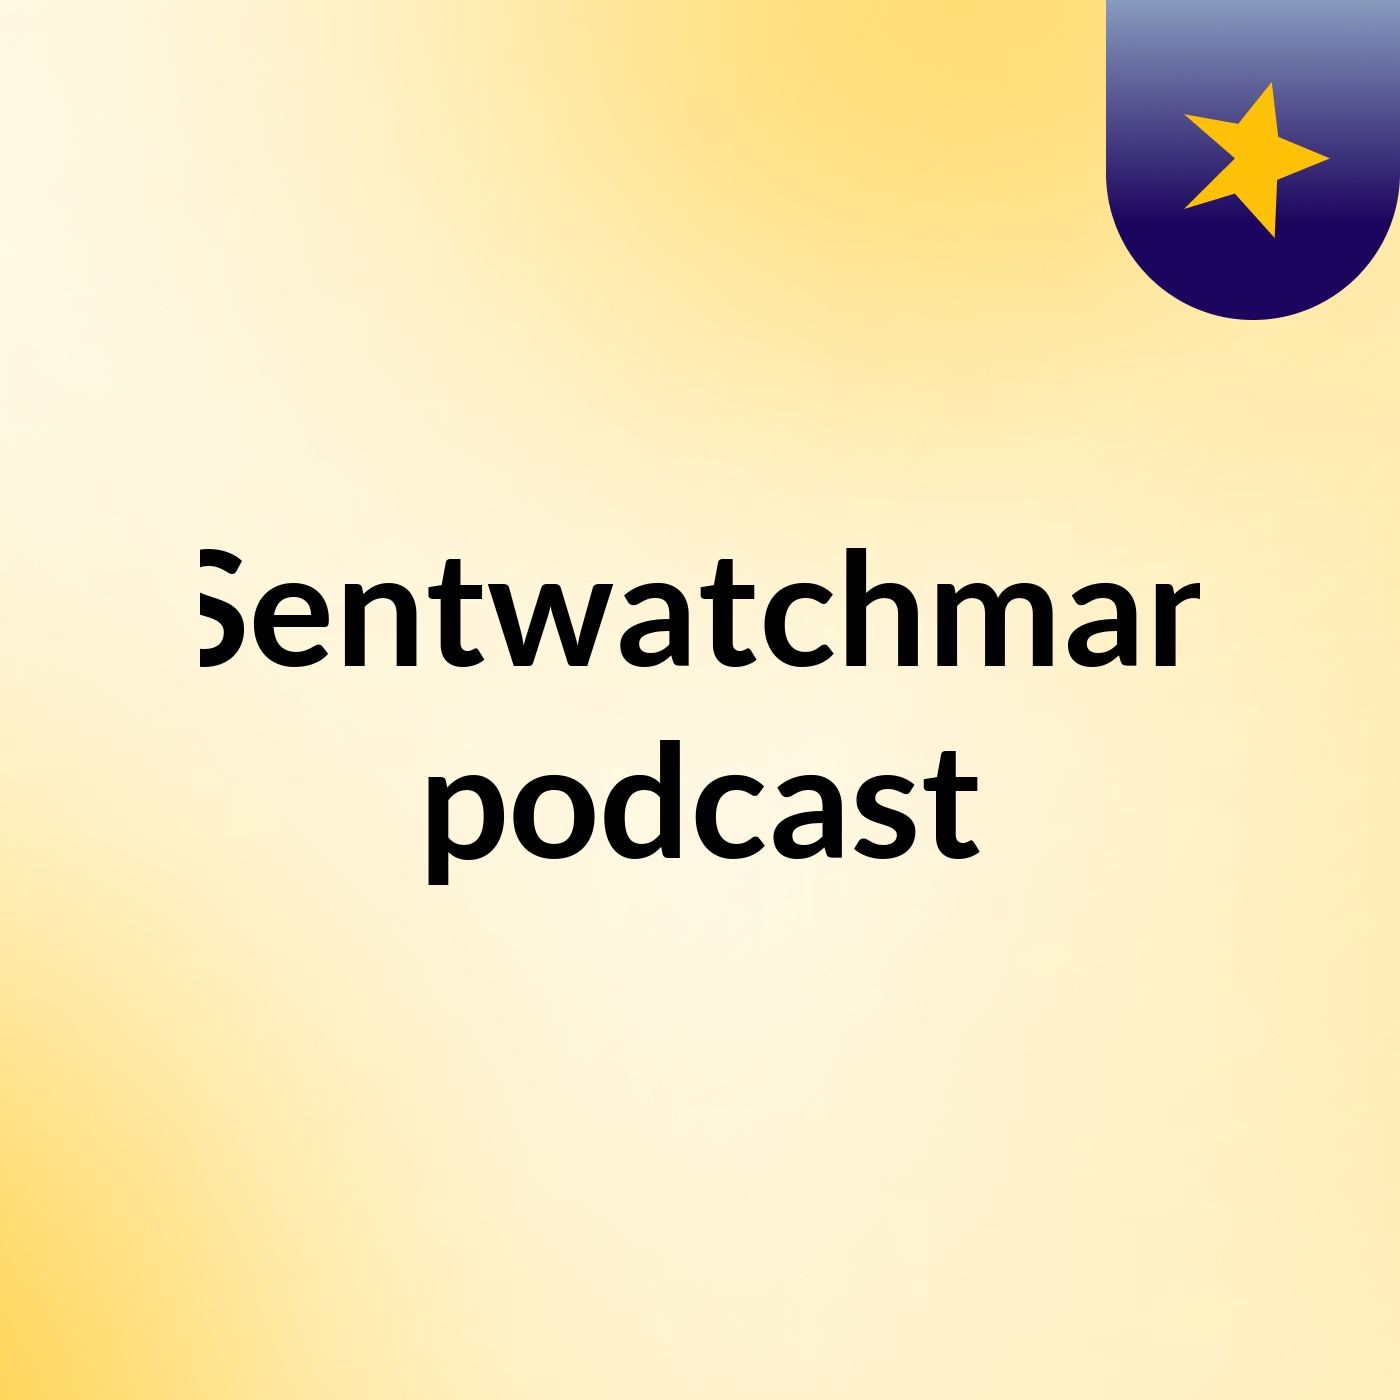 Sentwatchman podcast